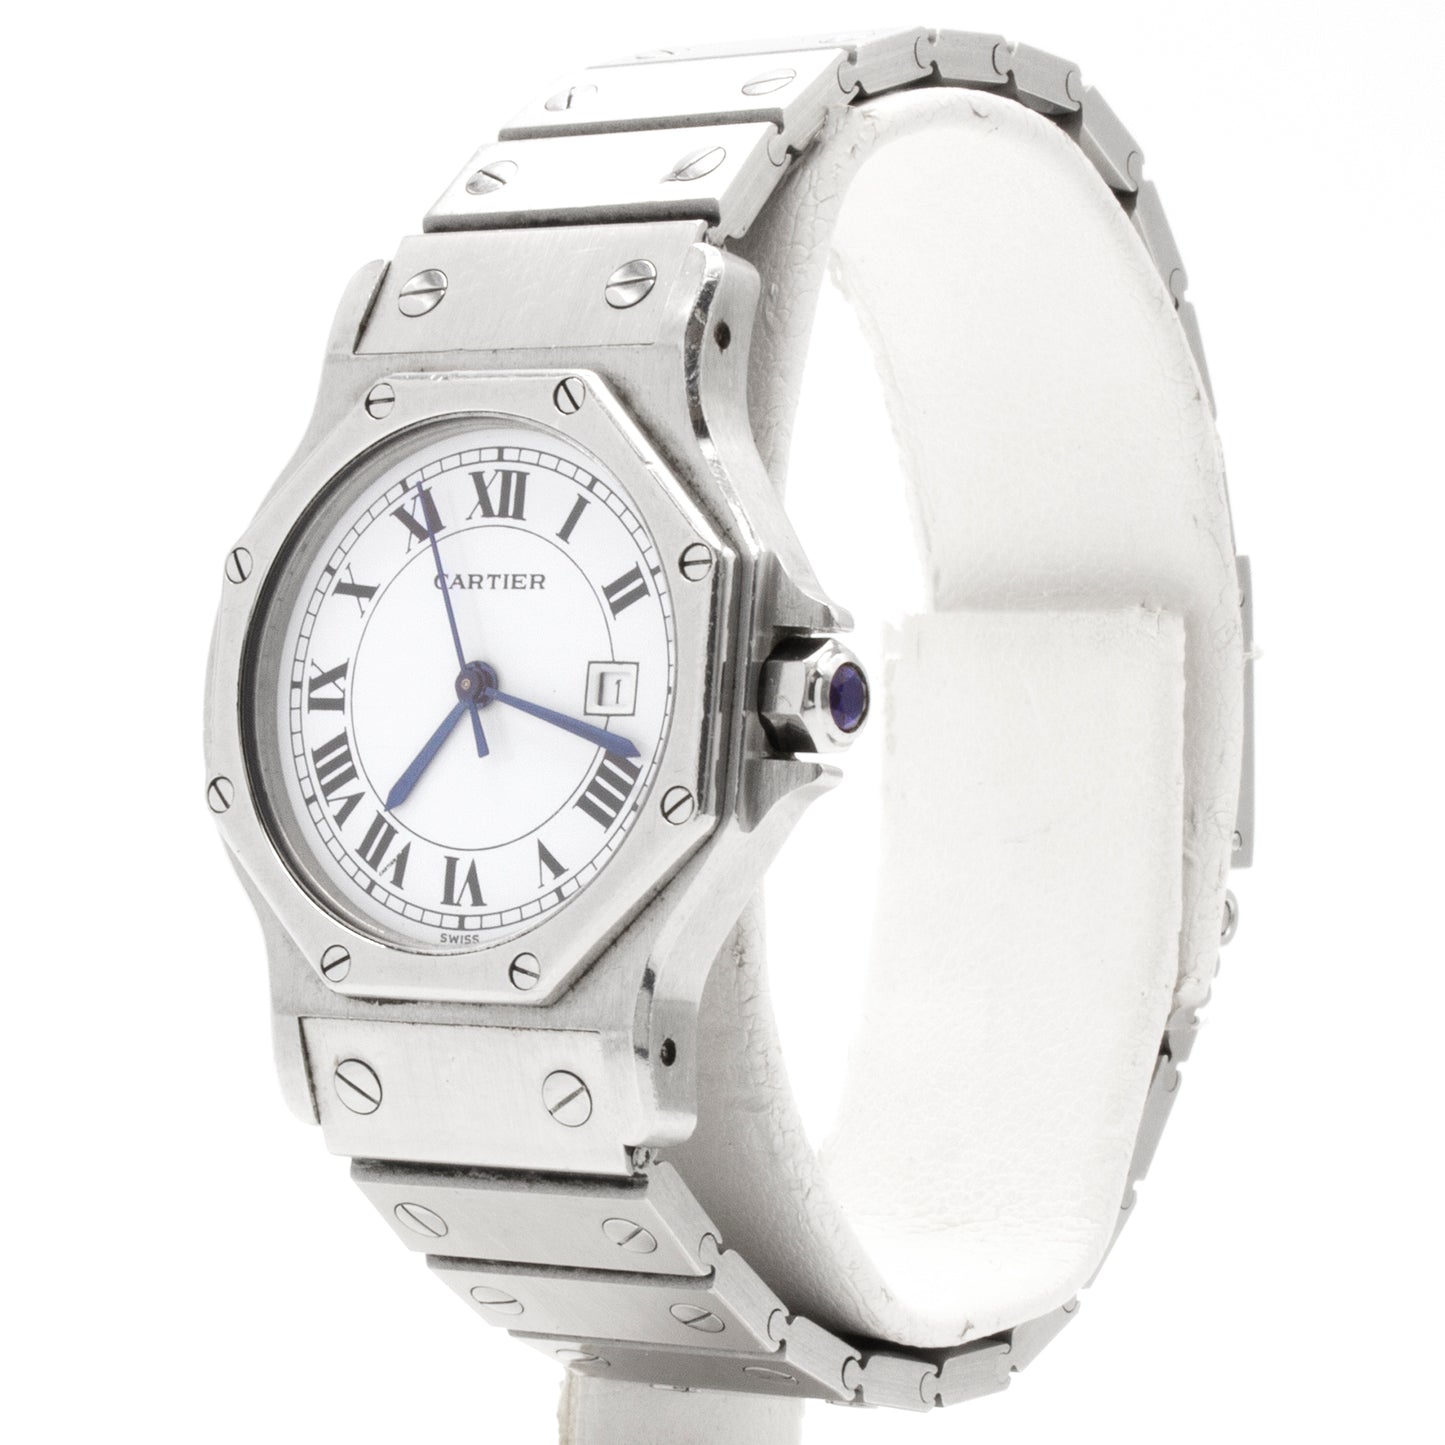 Cartier Santos Automatic watch